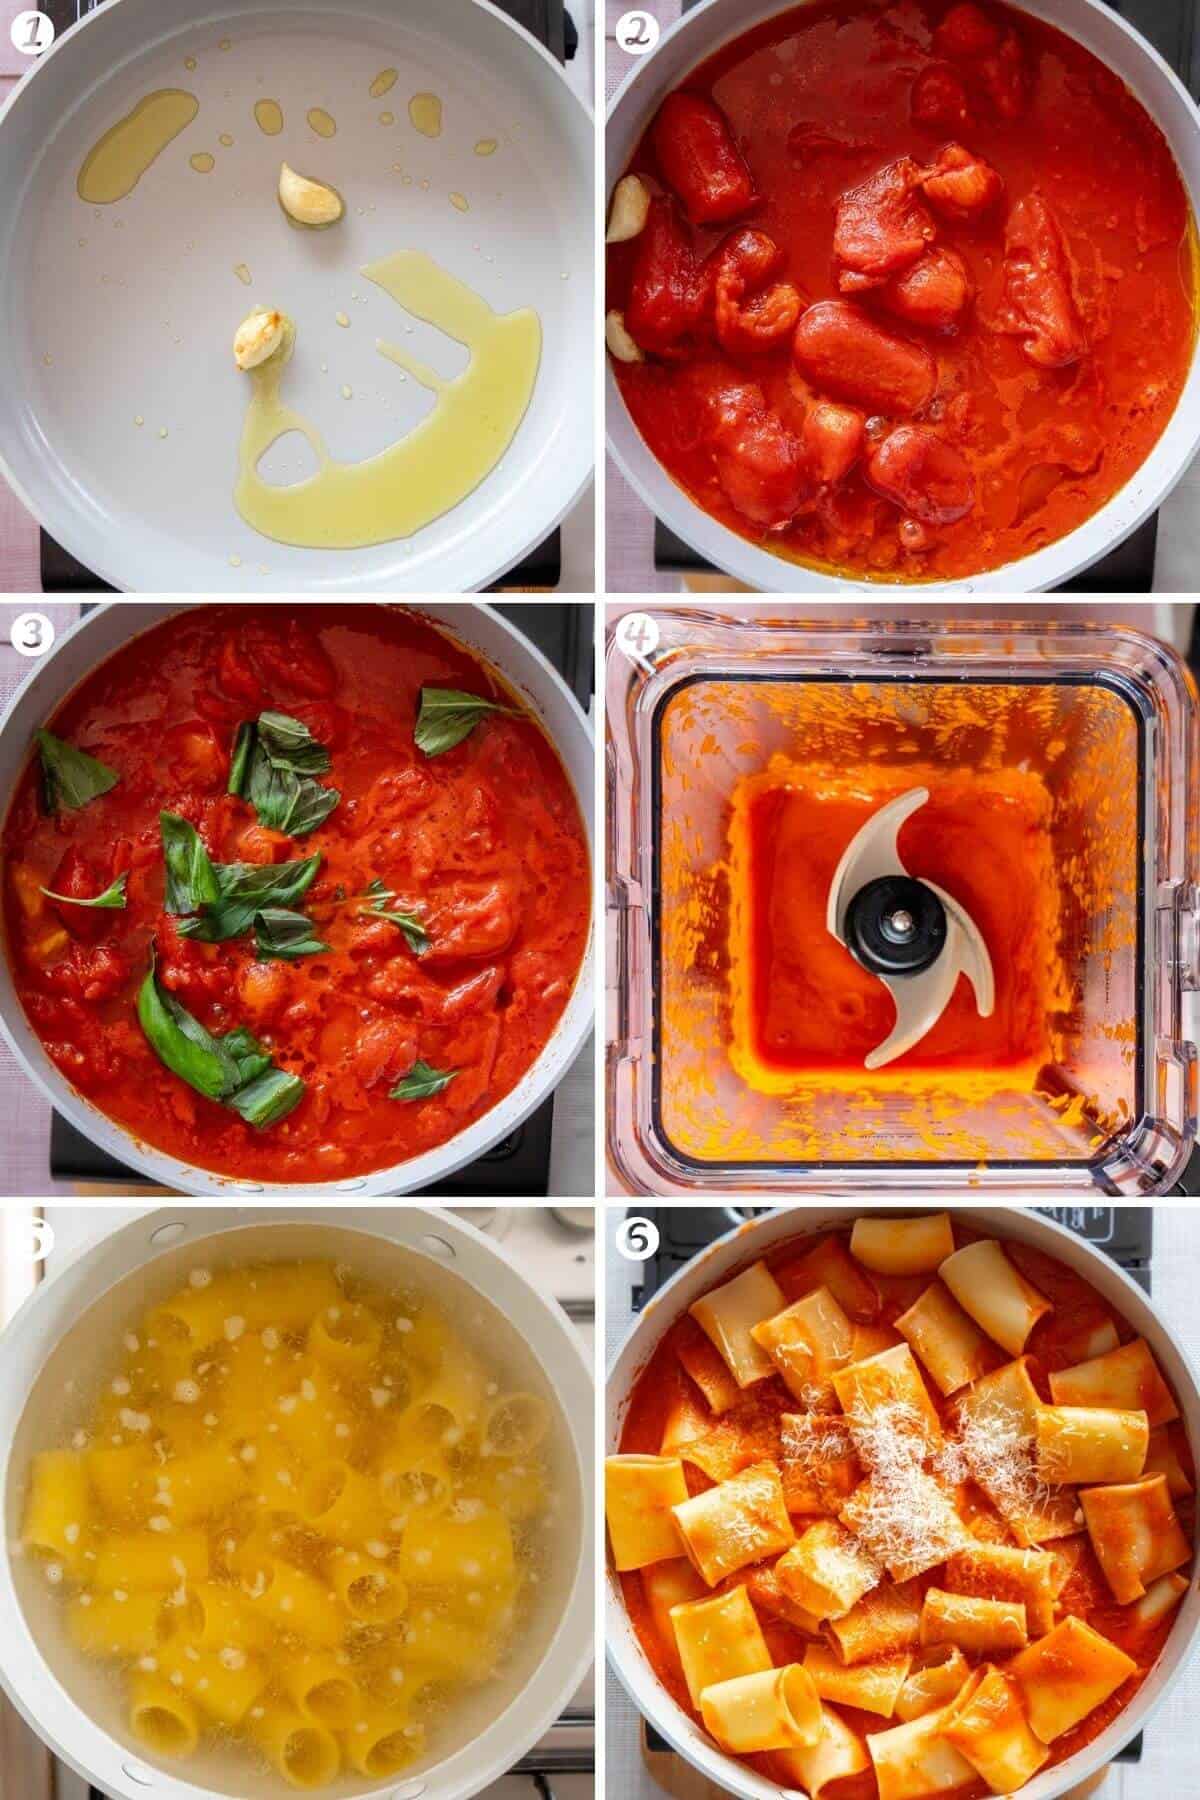 Steps on how to make a homemade tomato sauce